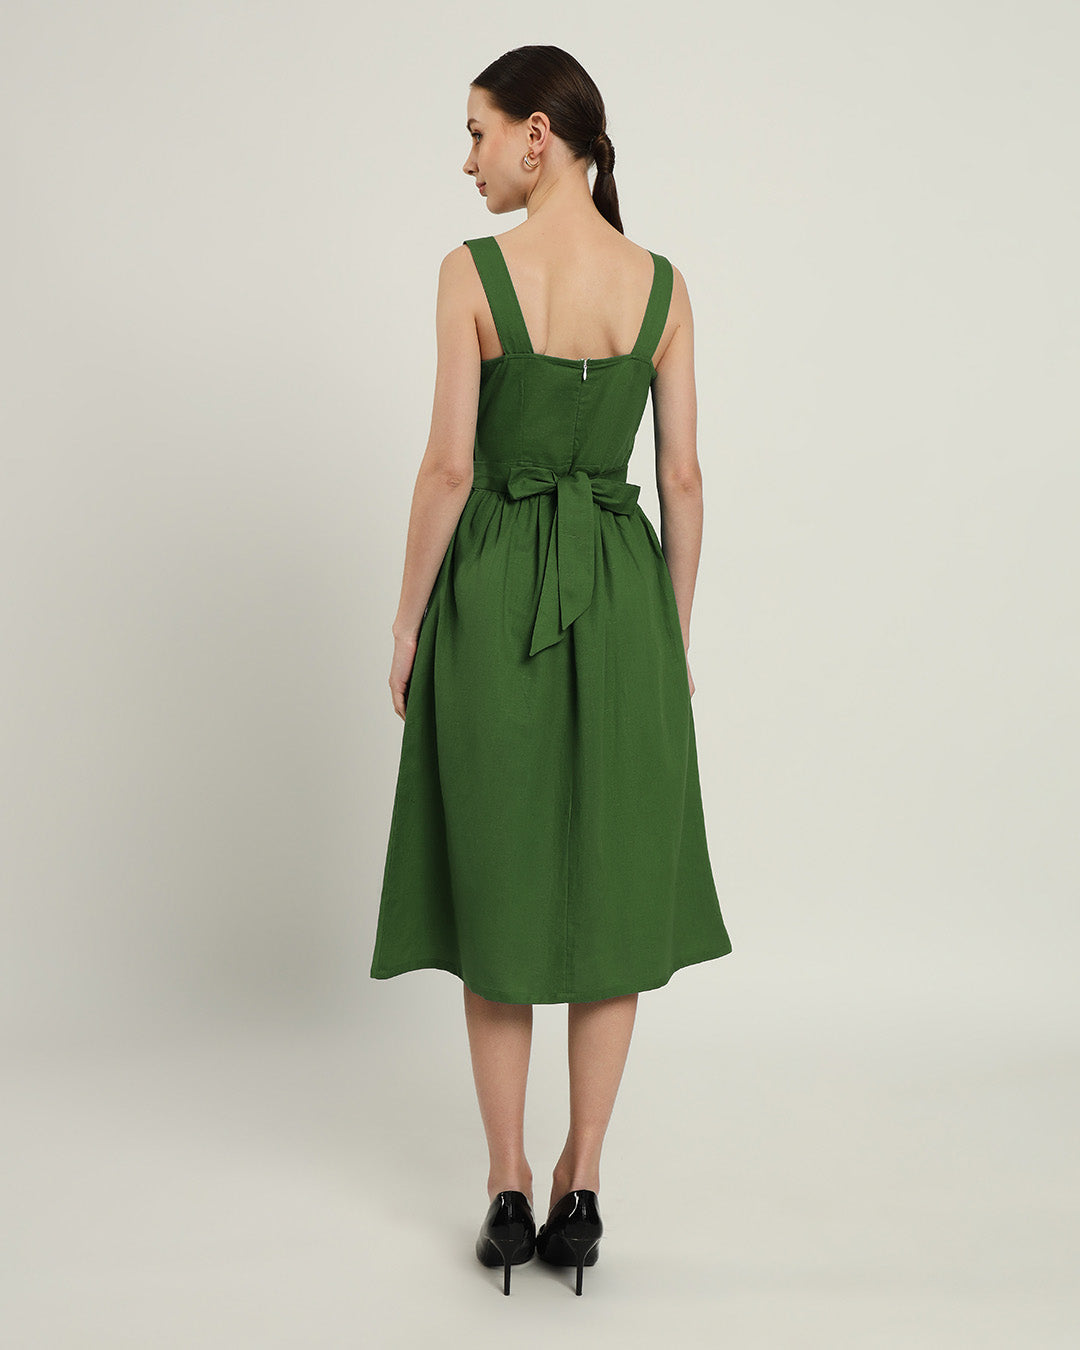 The Mihara Emerald Cotton Dress